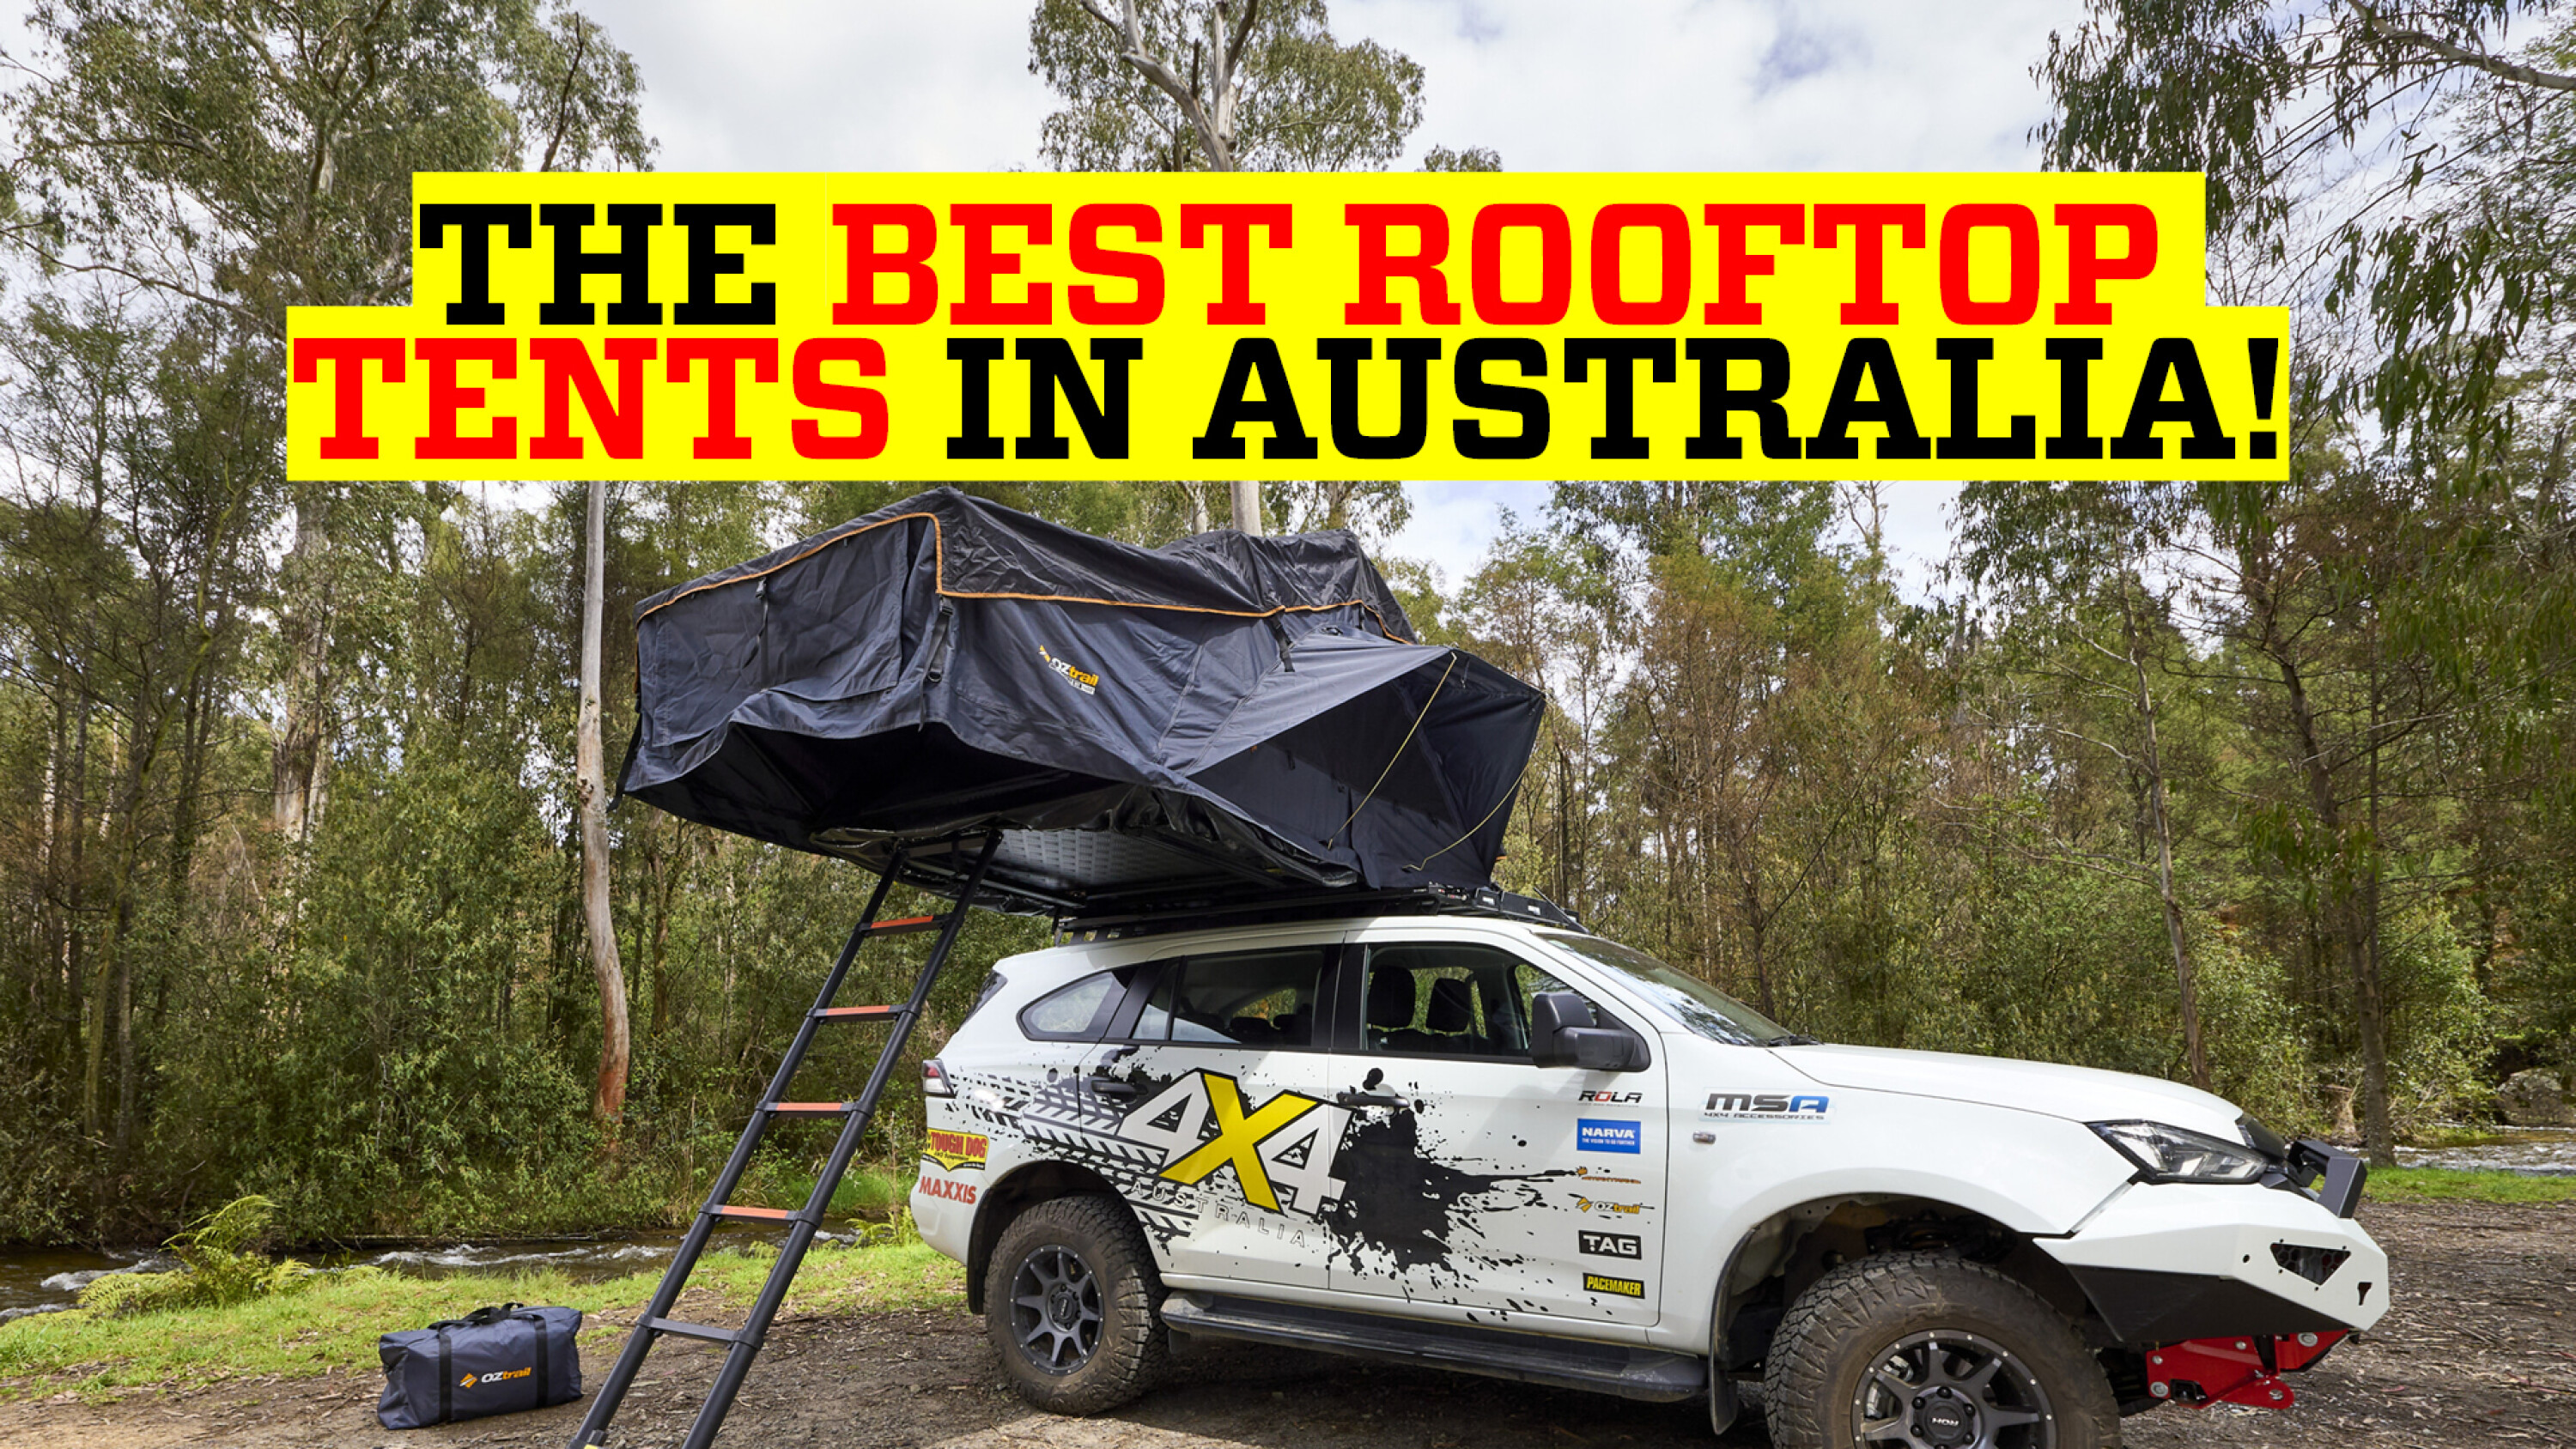 507a13a0/best rooftop tents australia jpg